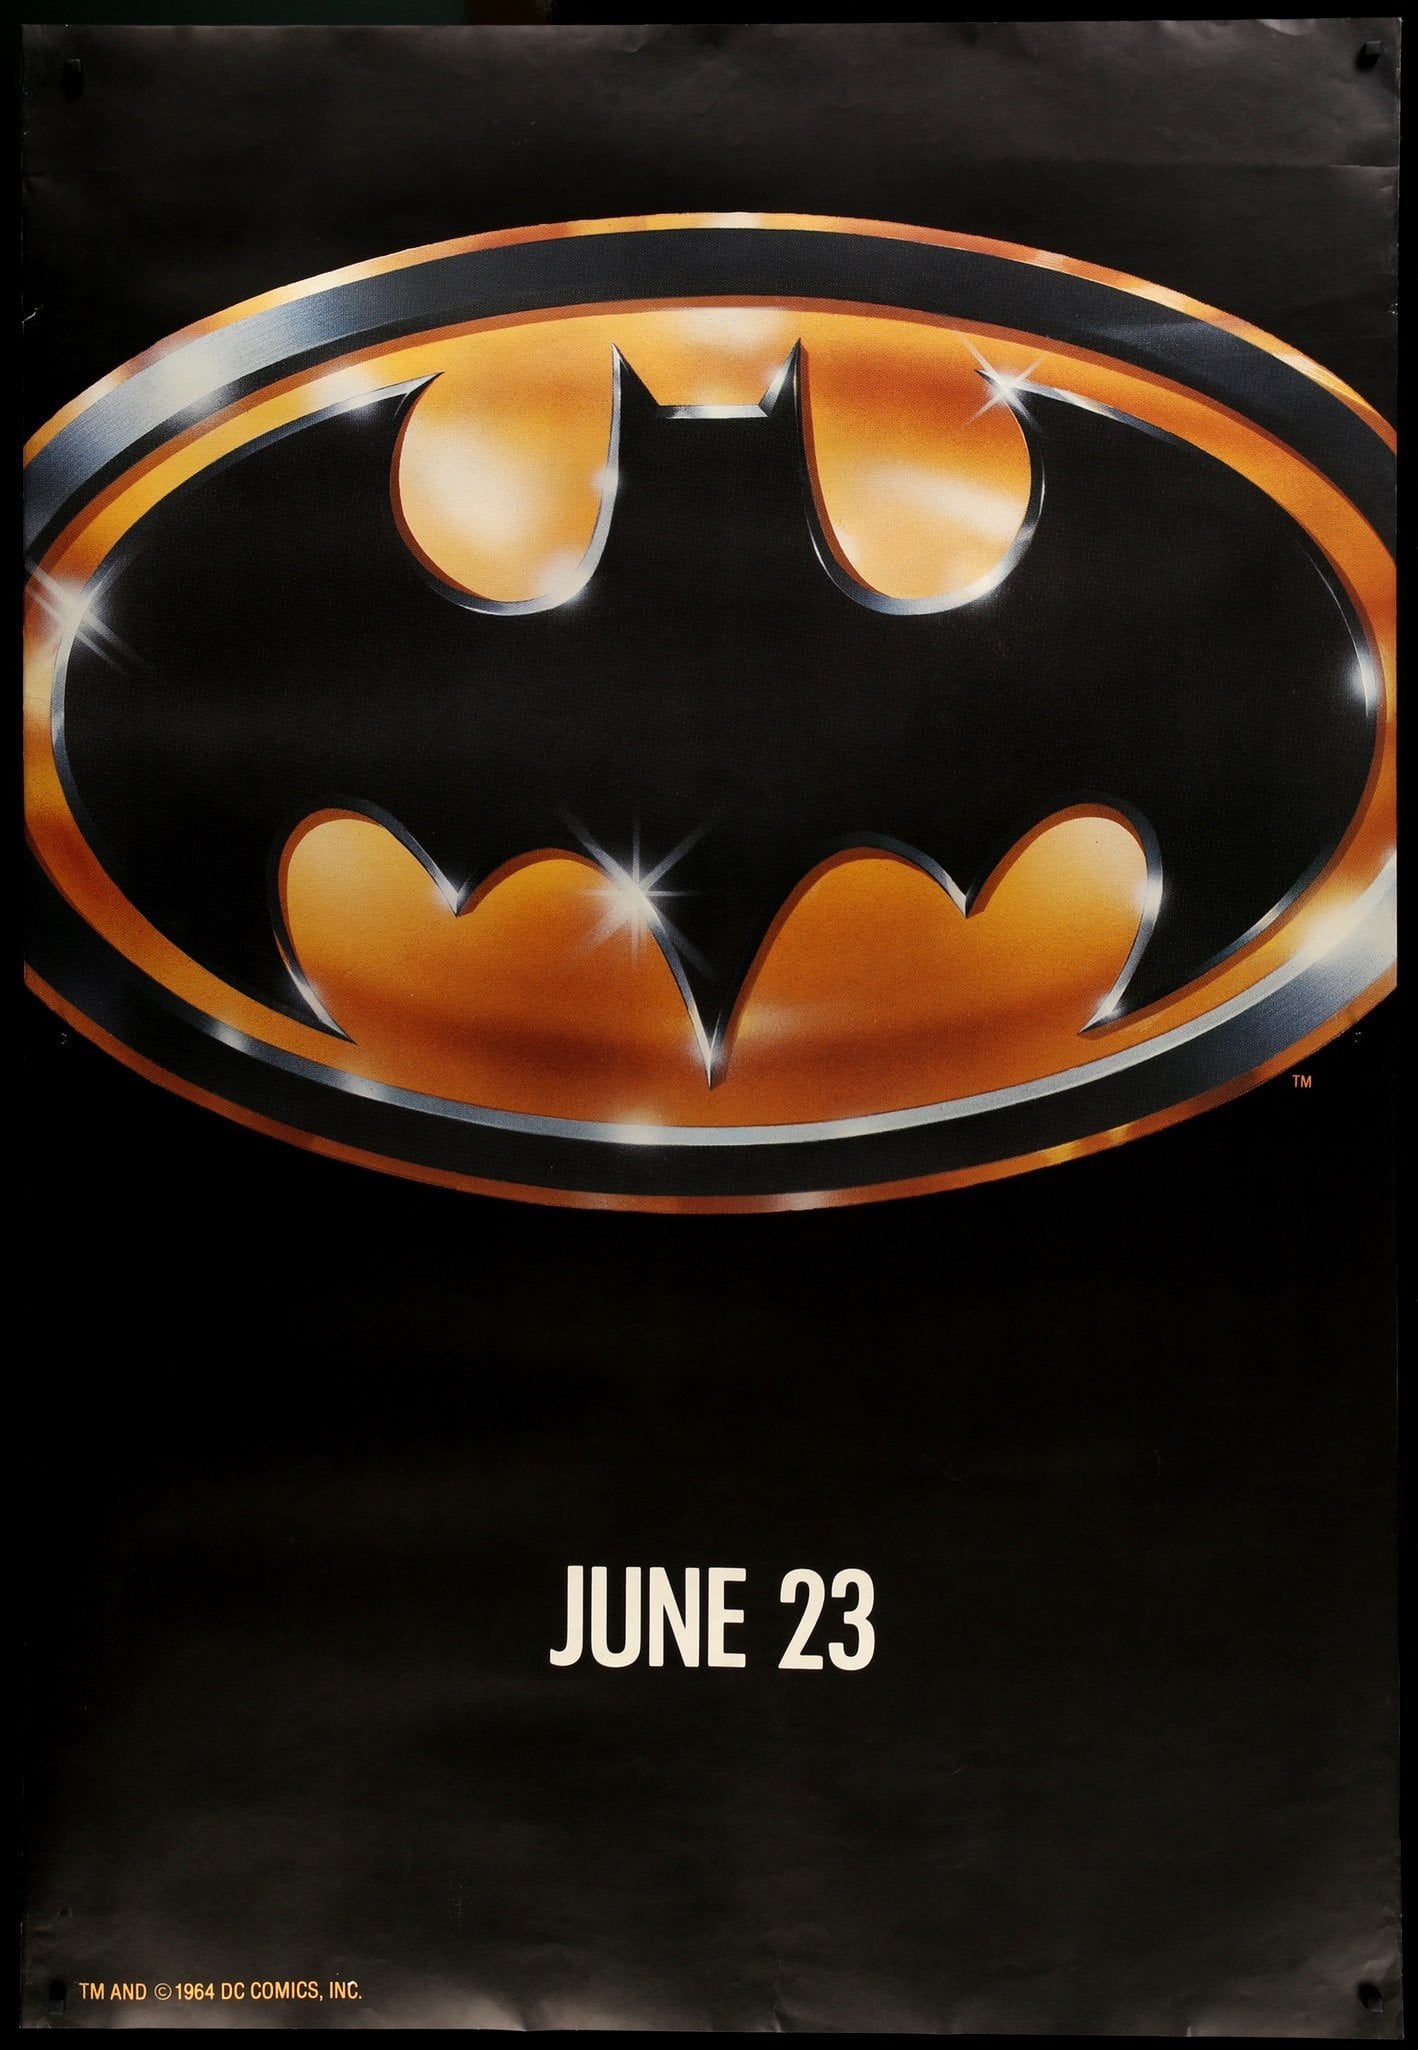 Batman (1989) original movie poster for sale at Original Film Art